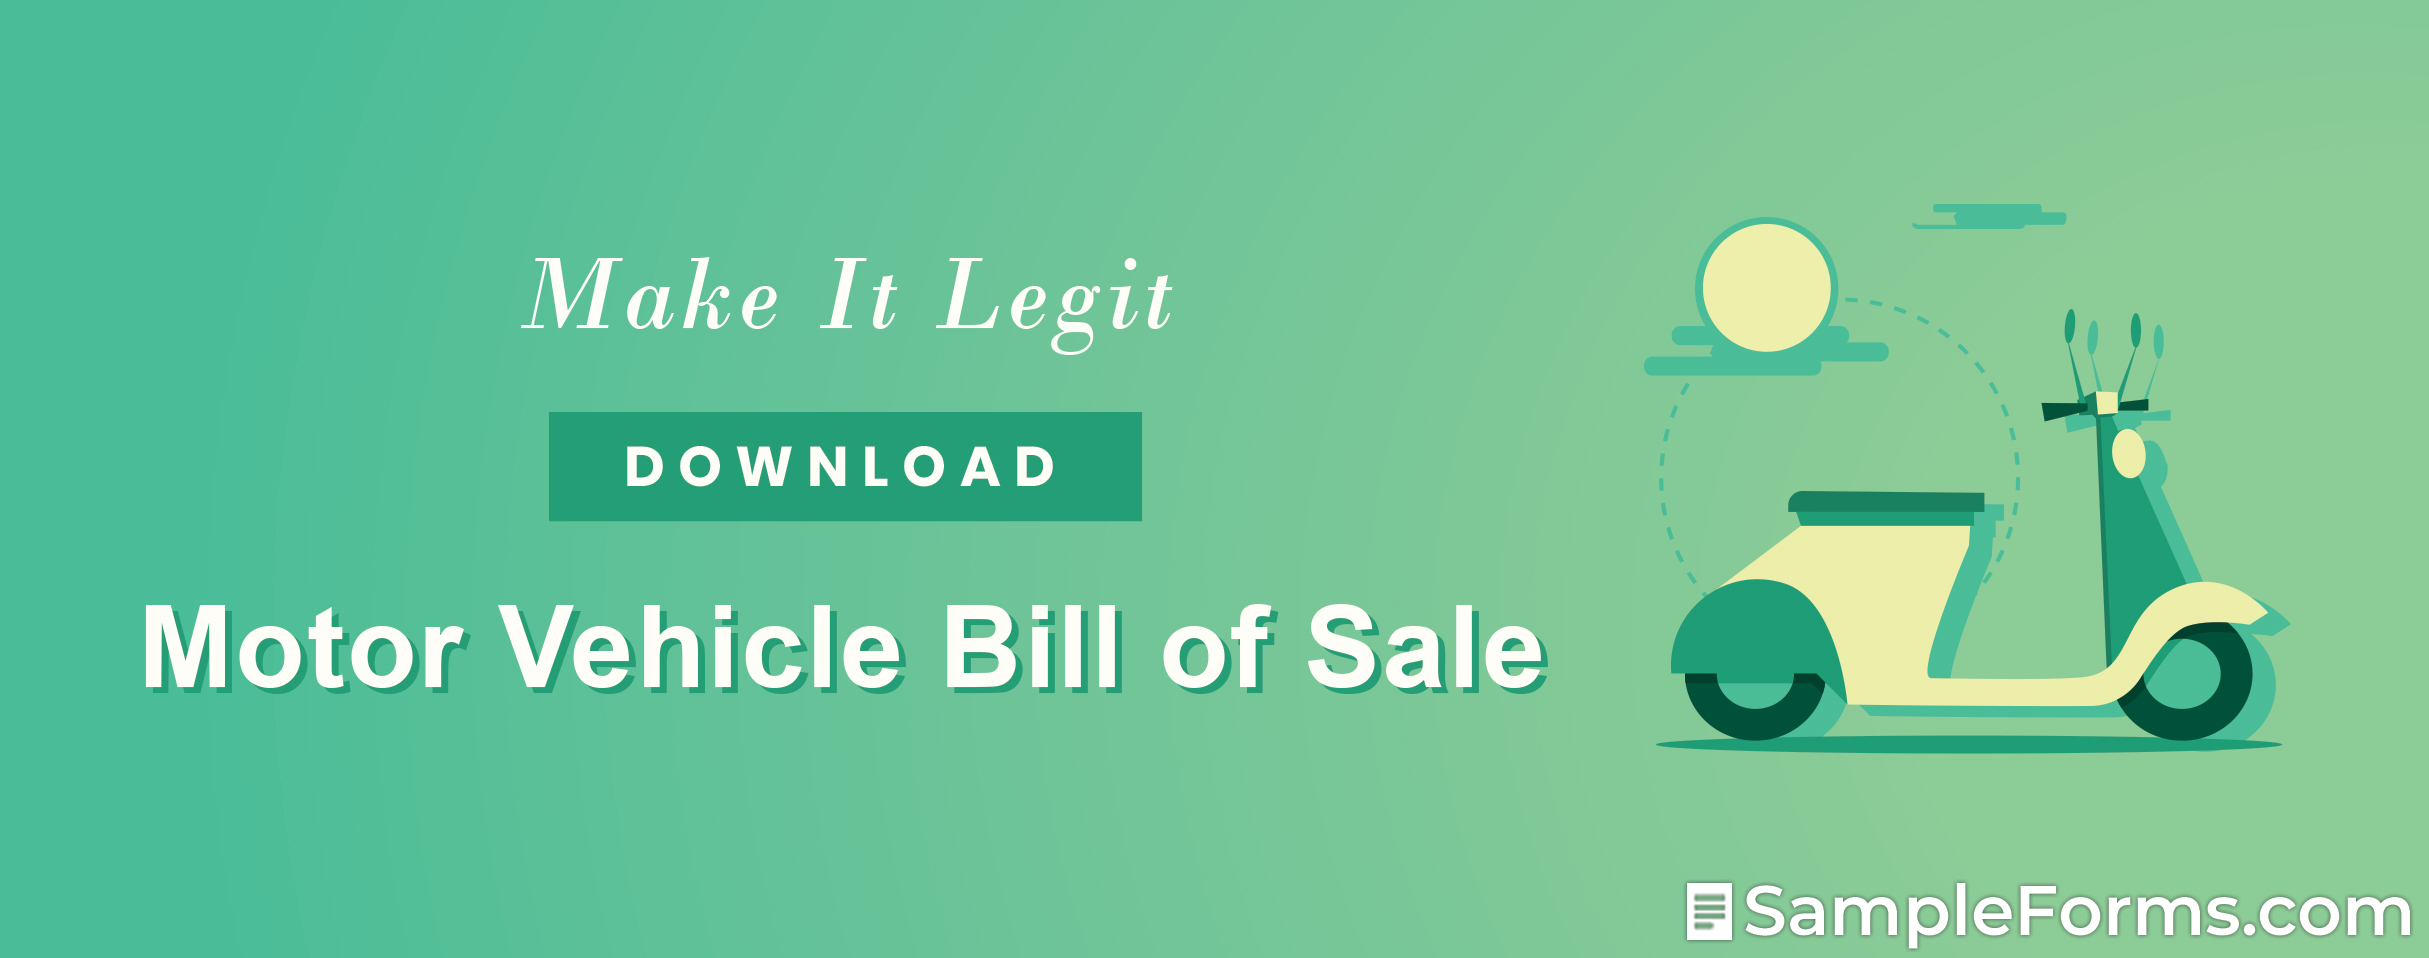 Motor Vehicle Bill of Sale3